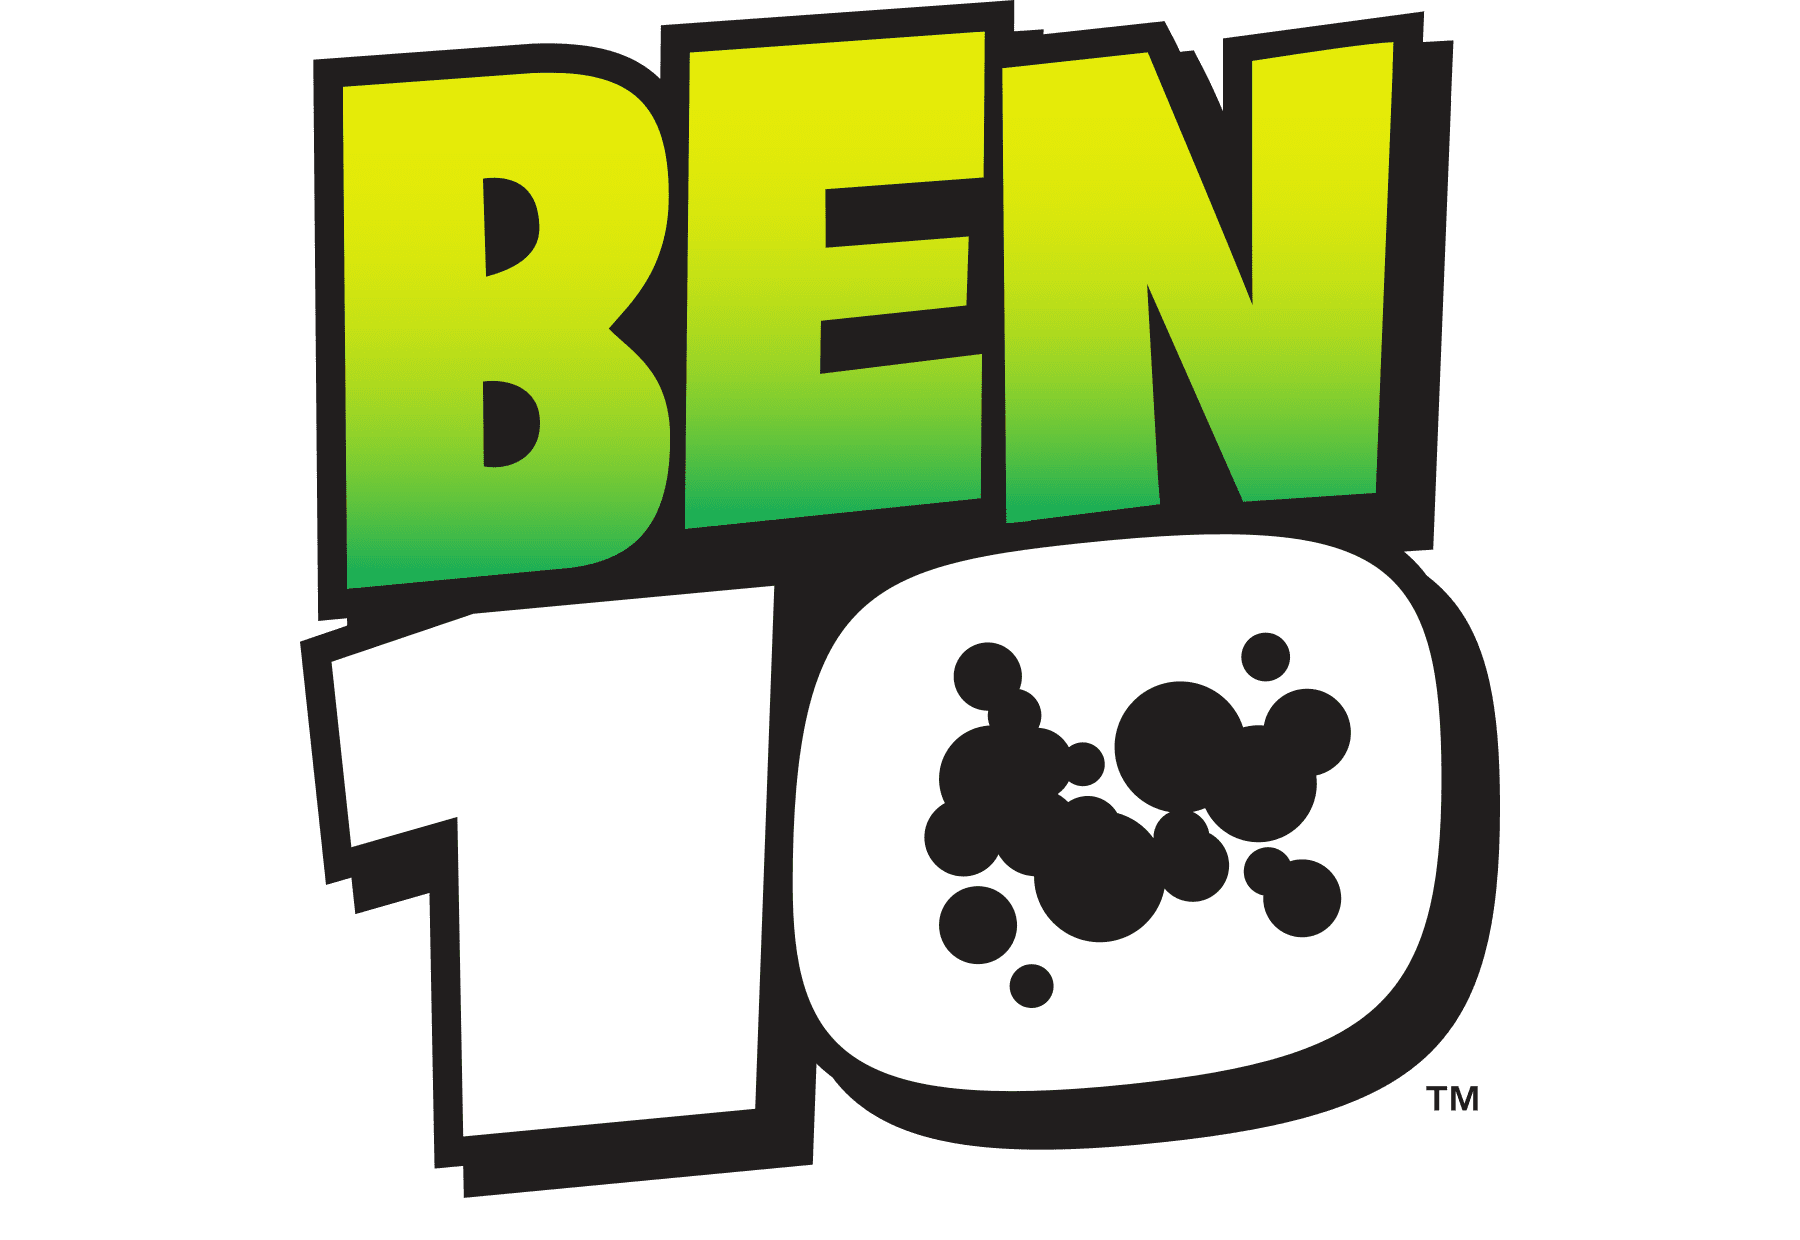 Ben 10 Alien Cartoon Network, BEN 10 transparent background PNG